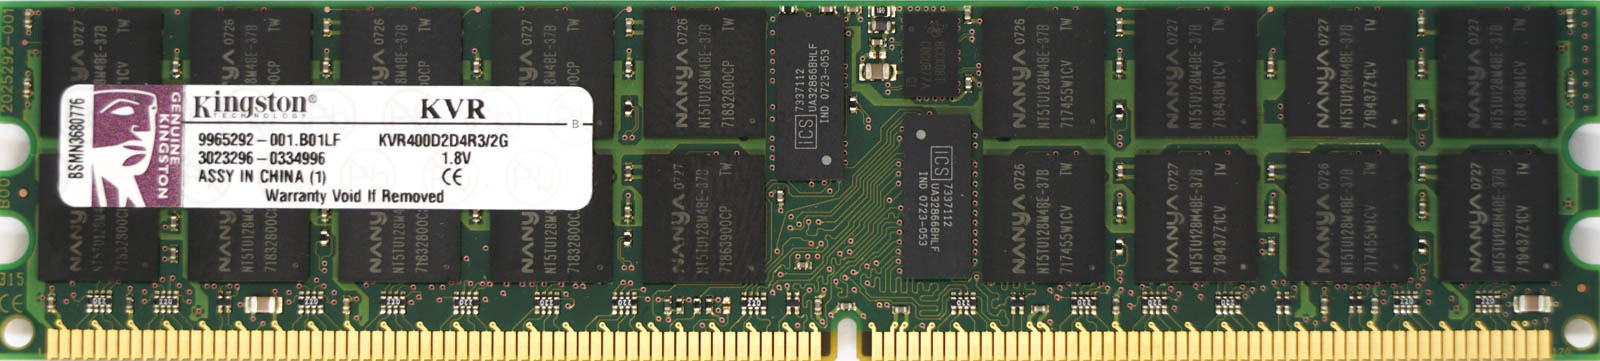 Kingston - 2GB PC2-3200R (DDR2-400Mhz, 2RX4)